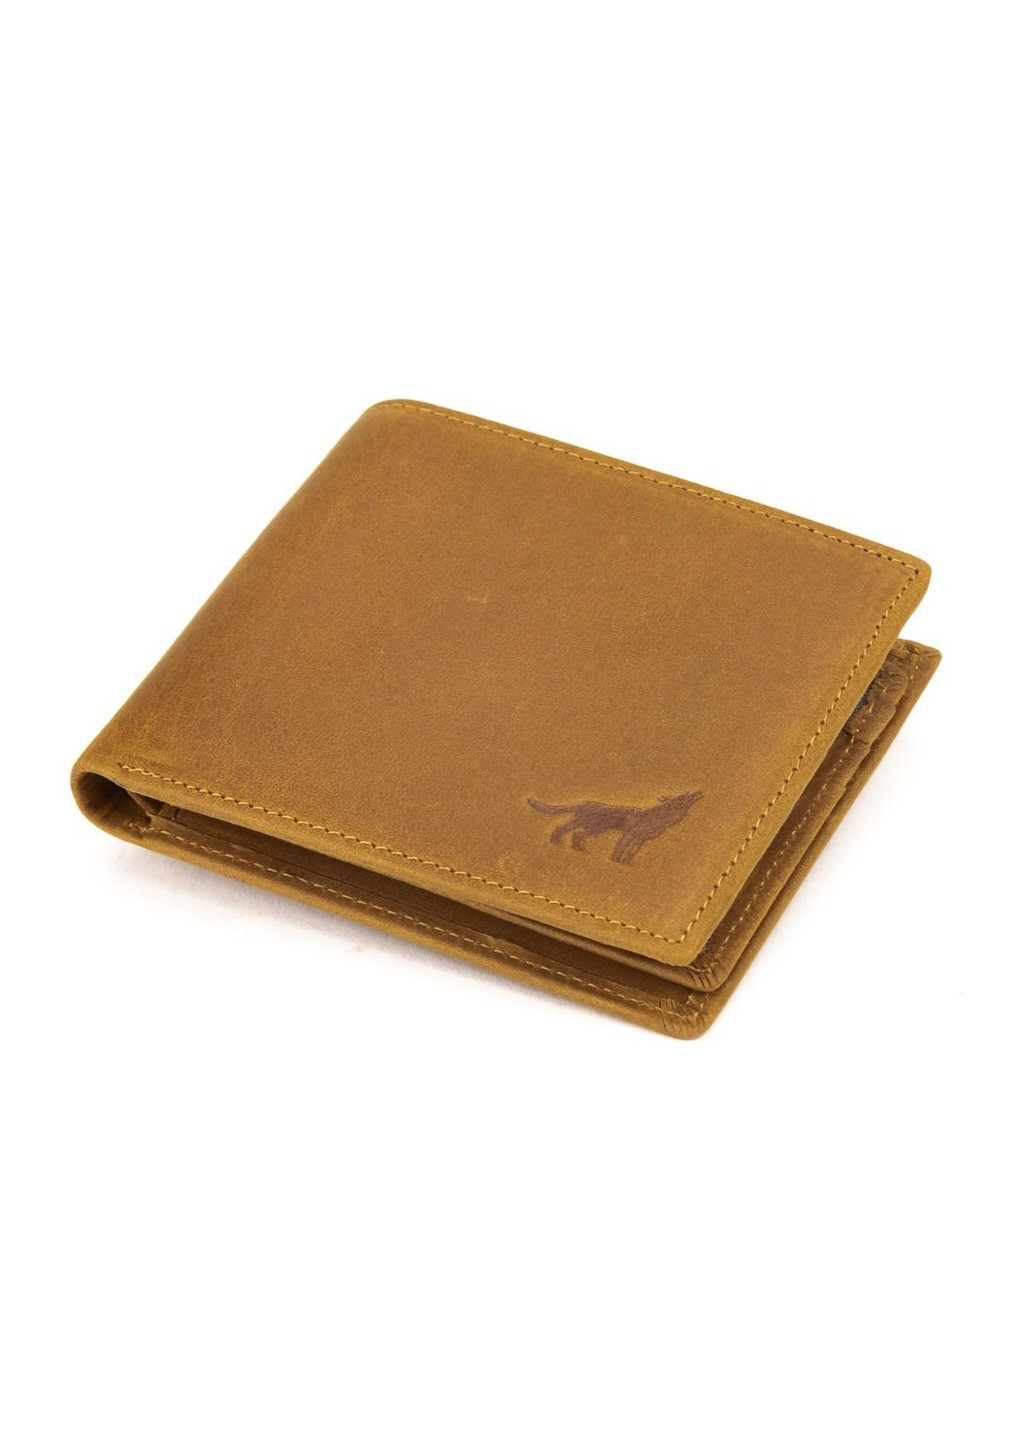 Портмоне кожаное коричневое с тиснением волка M39-7063B Tiding Bag (277963190)